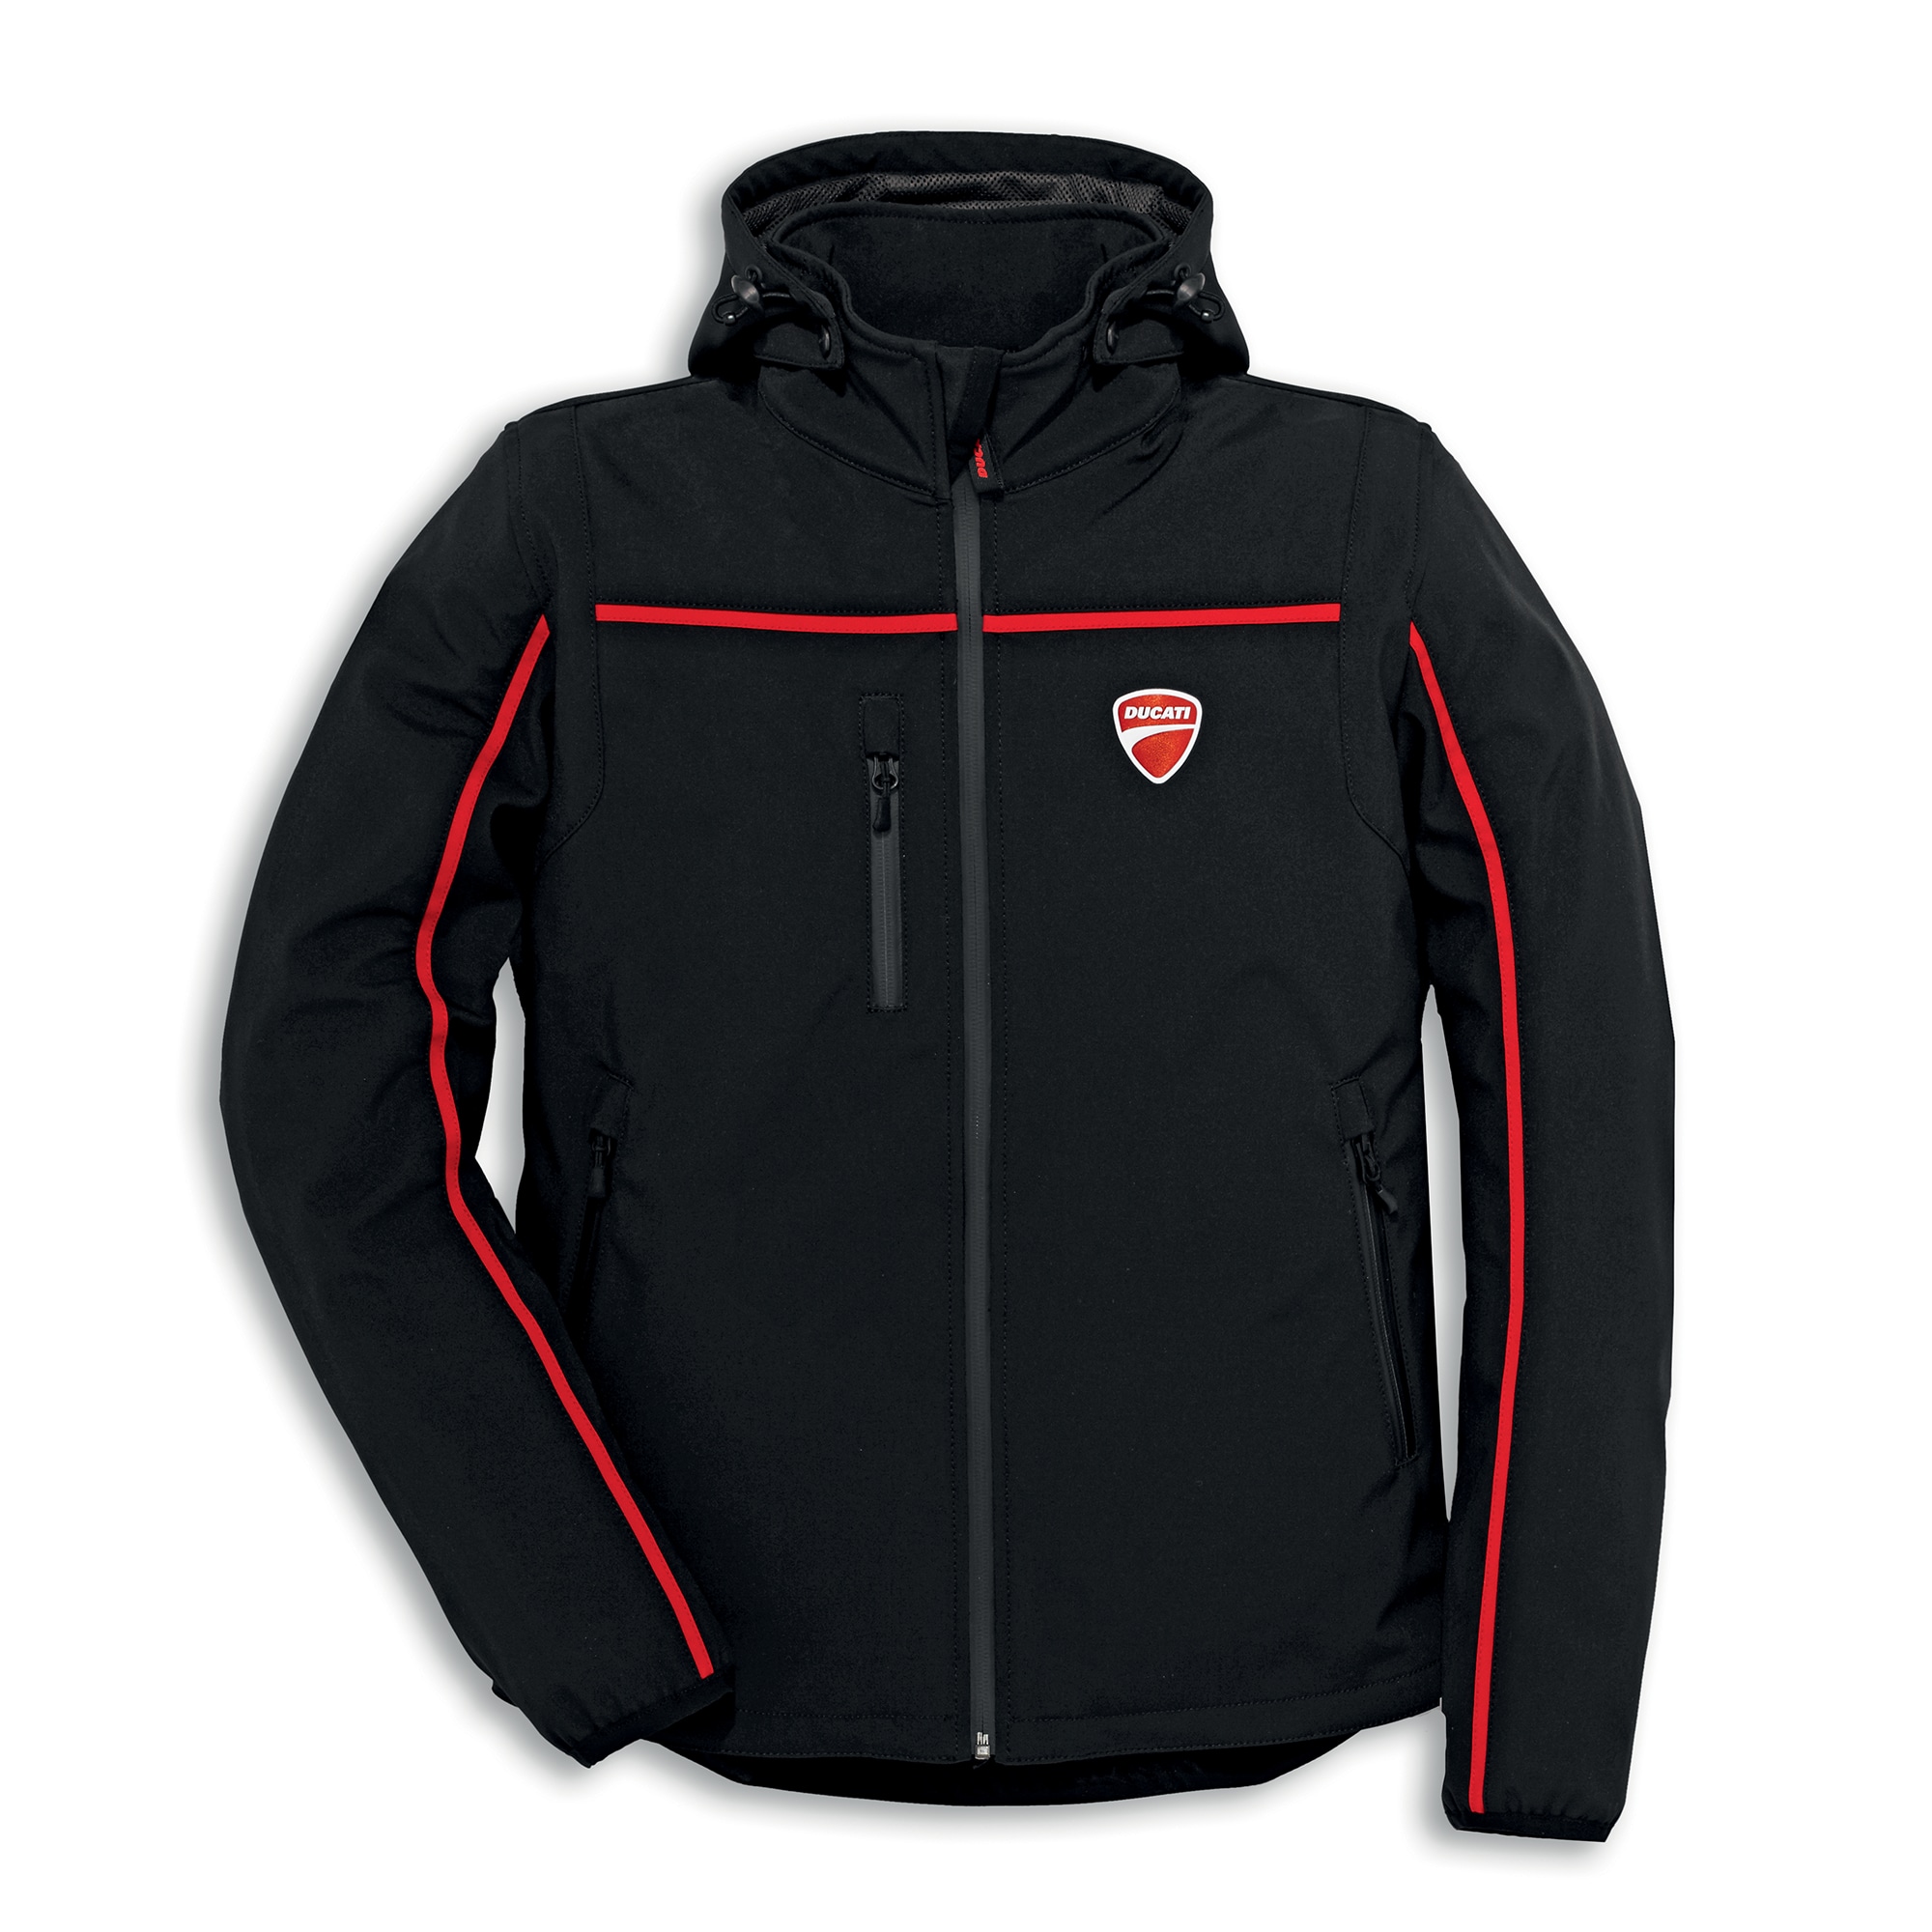 Ducati Redline - Fabric jacket - DUCPERFORMANCE | Genuine OEM Parts and ...